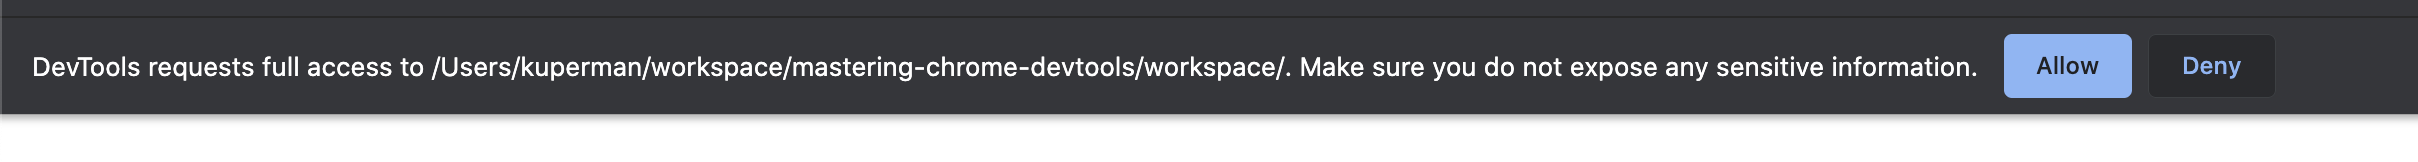 Workspace allow